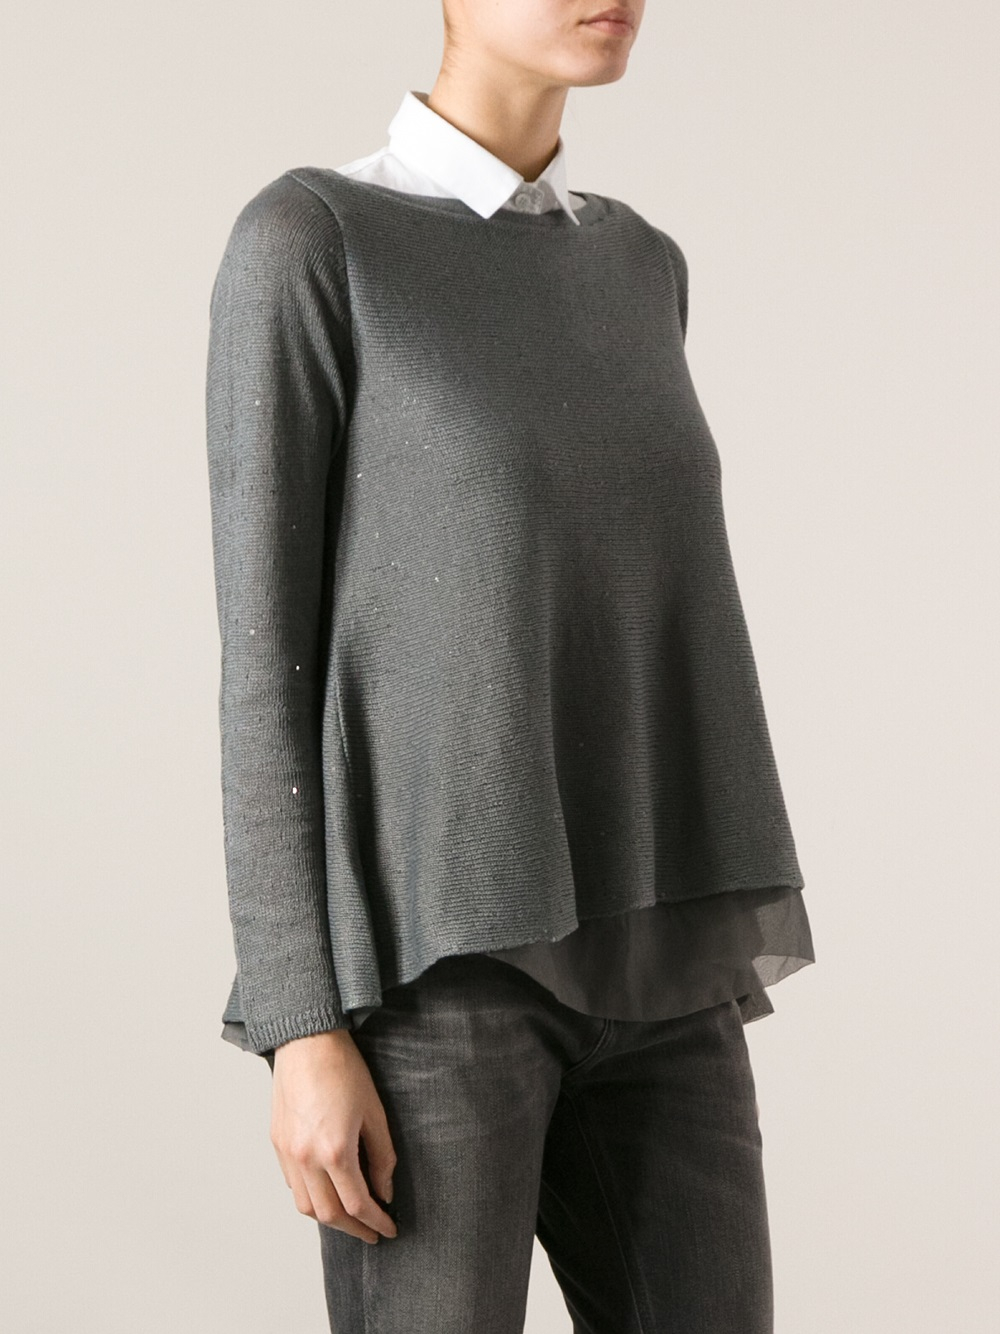 Lyst - Brunello Cucinelli Sheer Knit Sweater in Gray